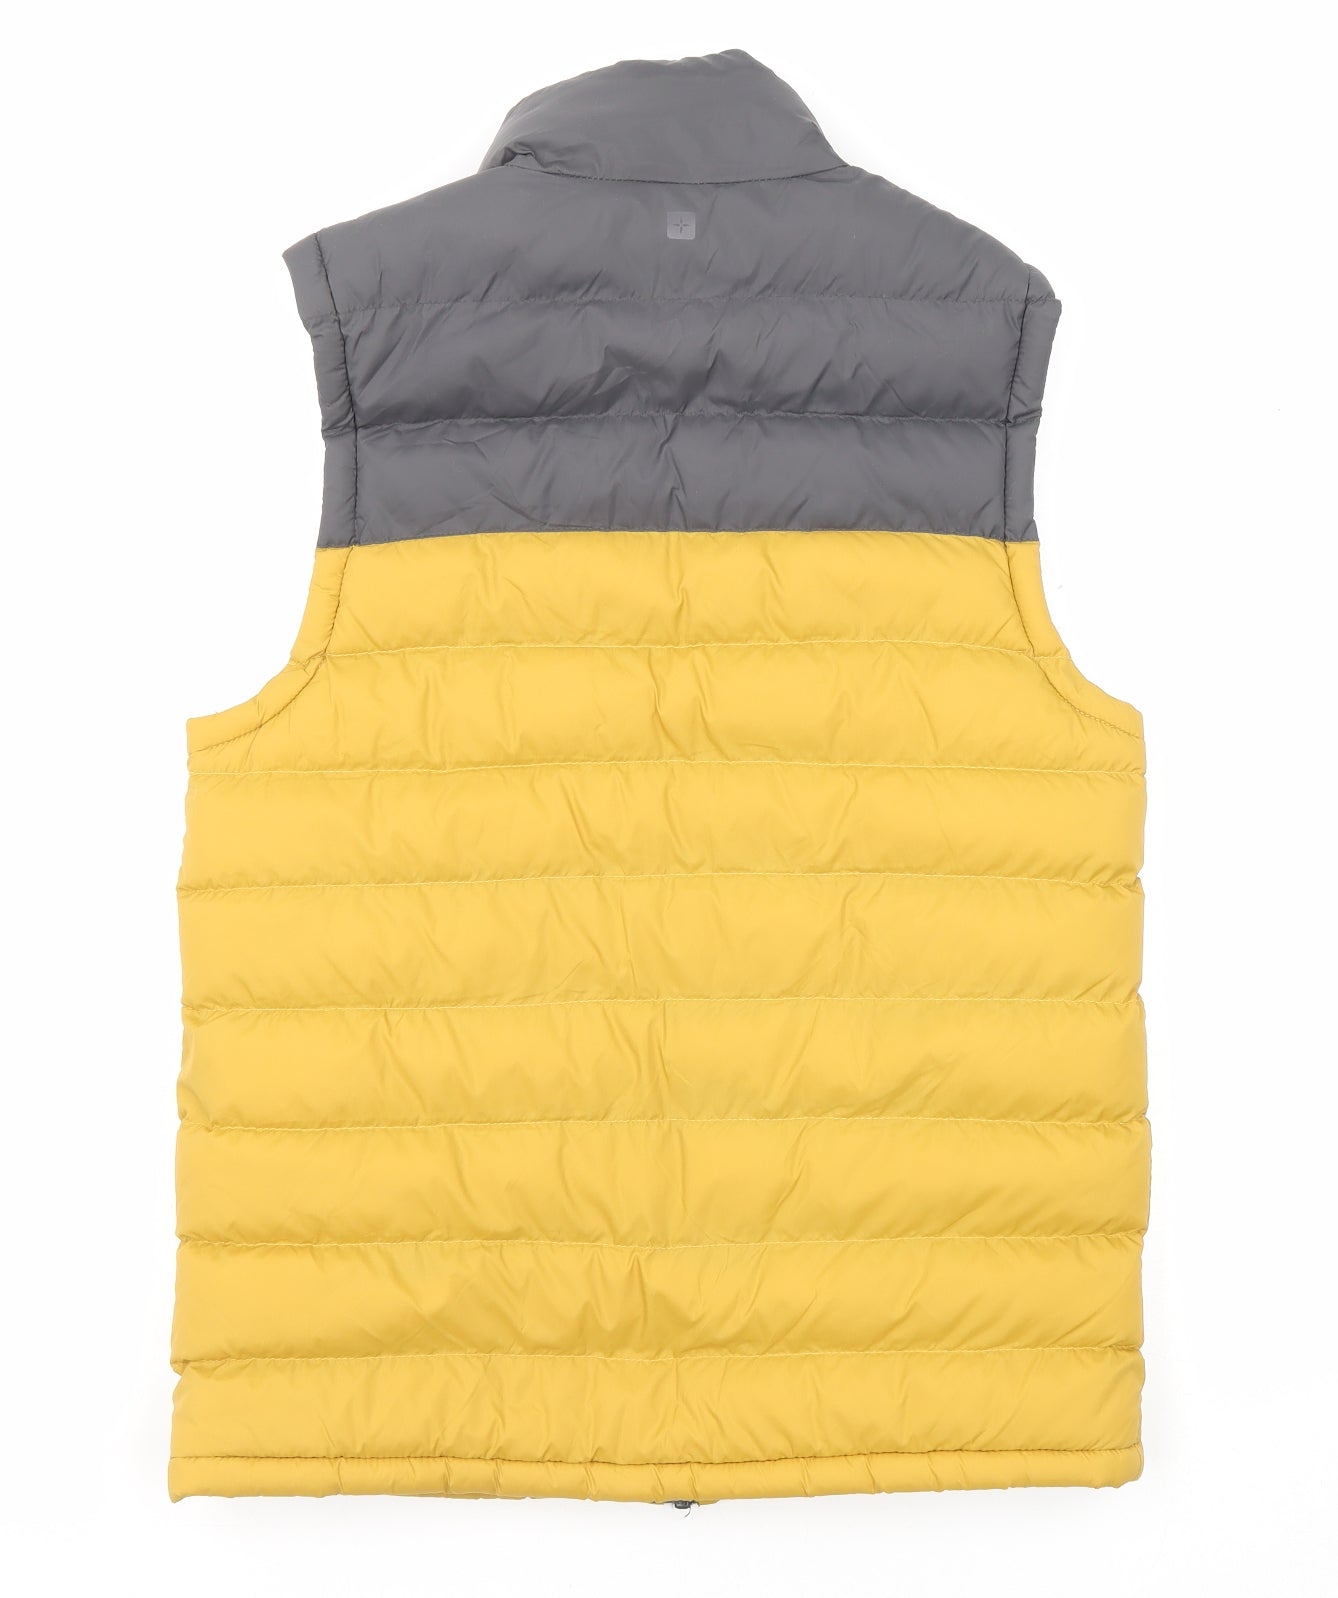 Mountain Warehouse Mens Yellow Gilet Jacket Size XS Zip